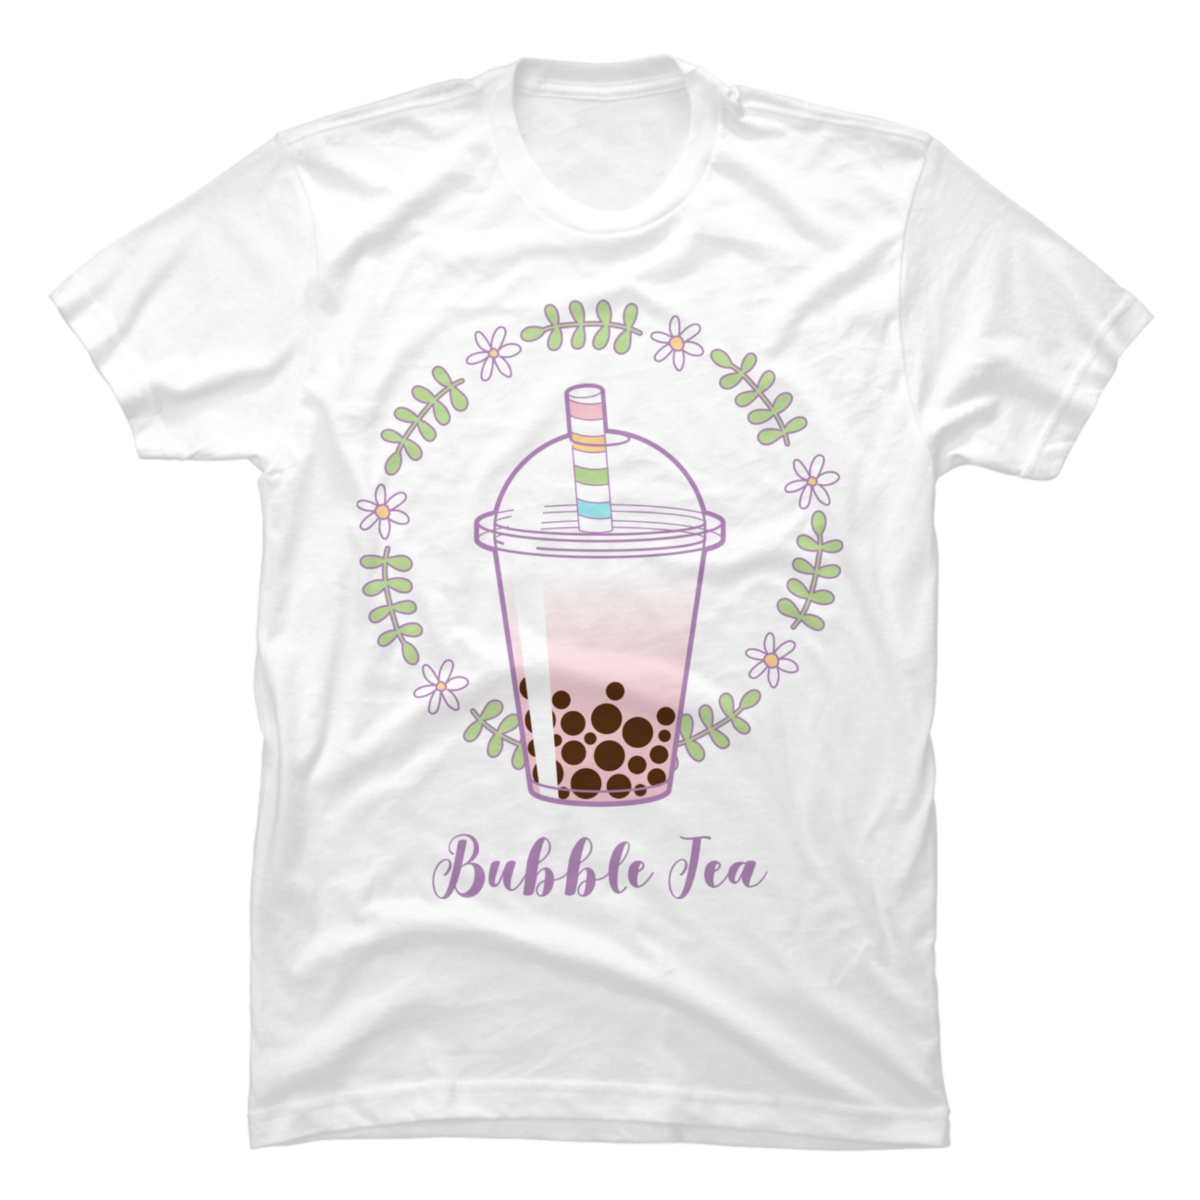 bubble tee shirts